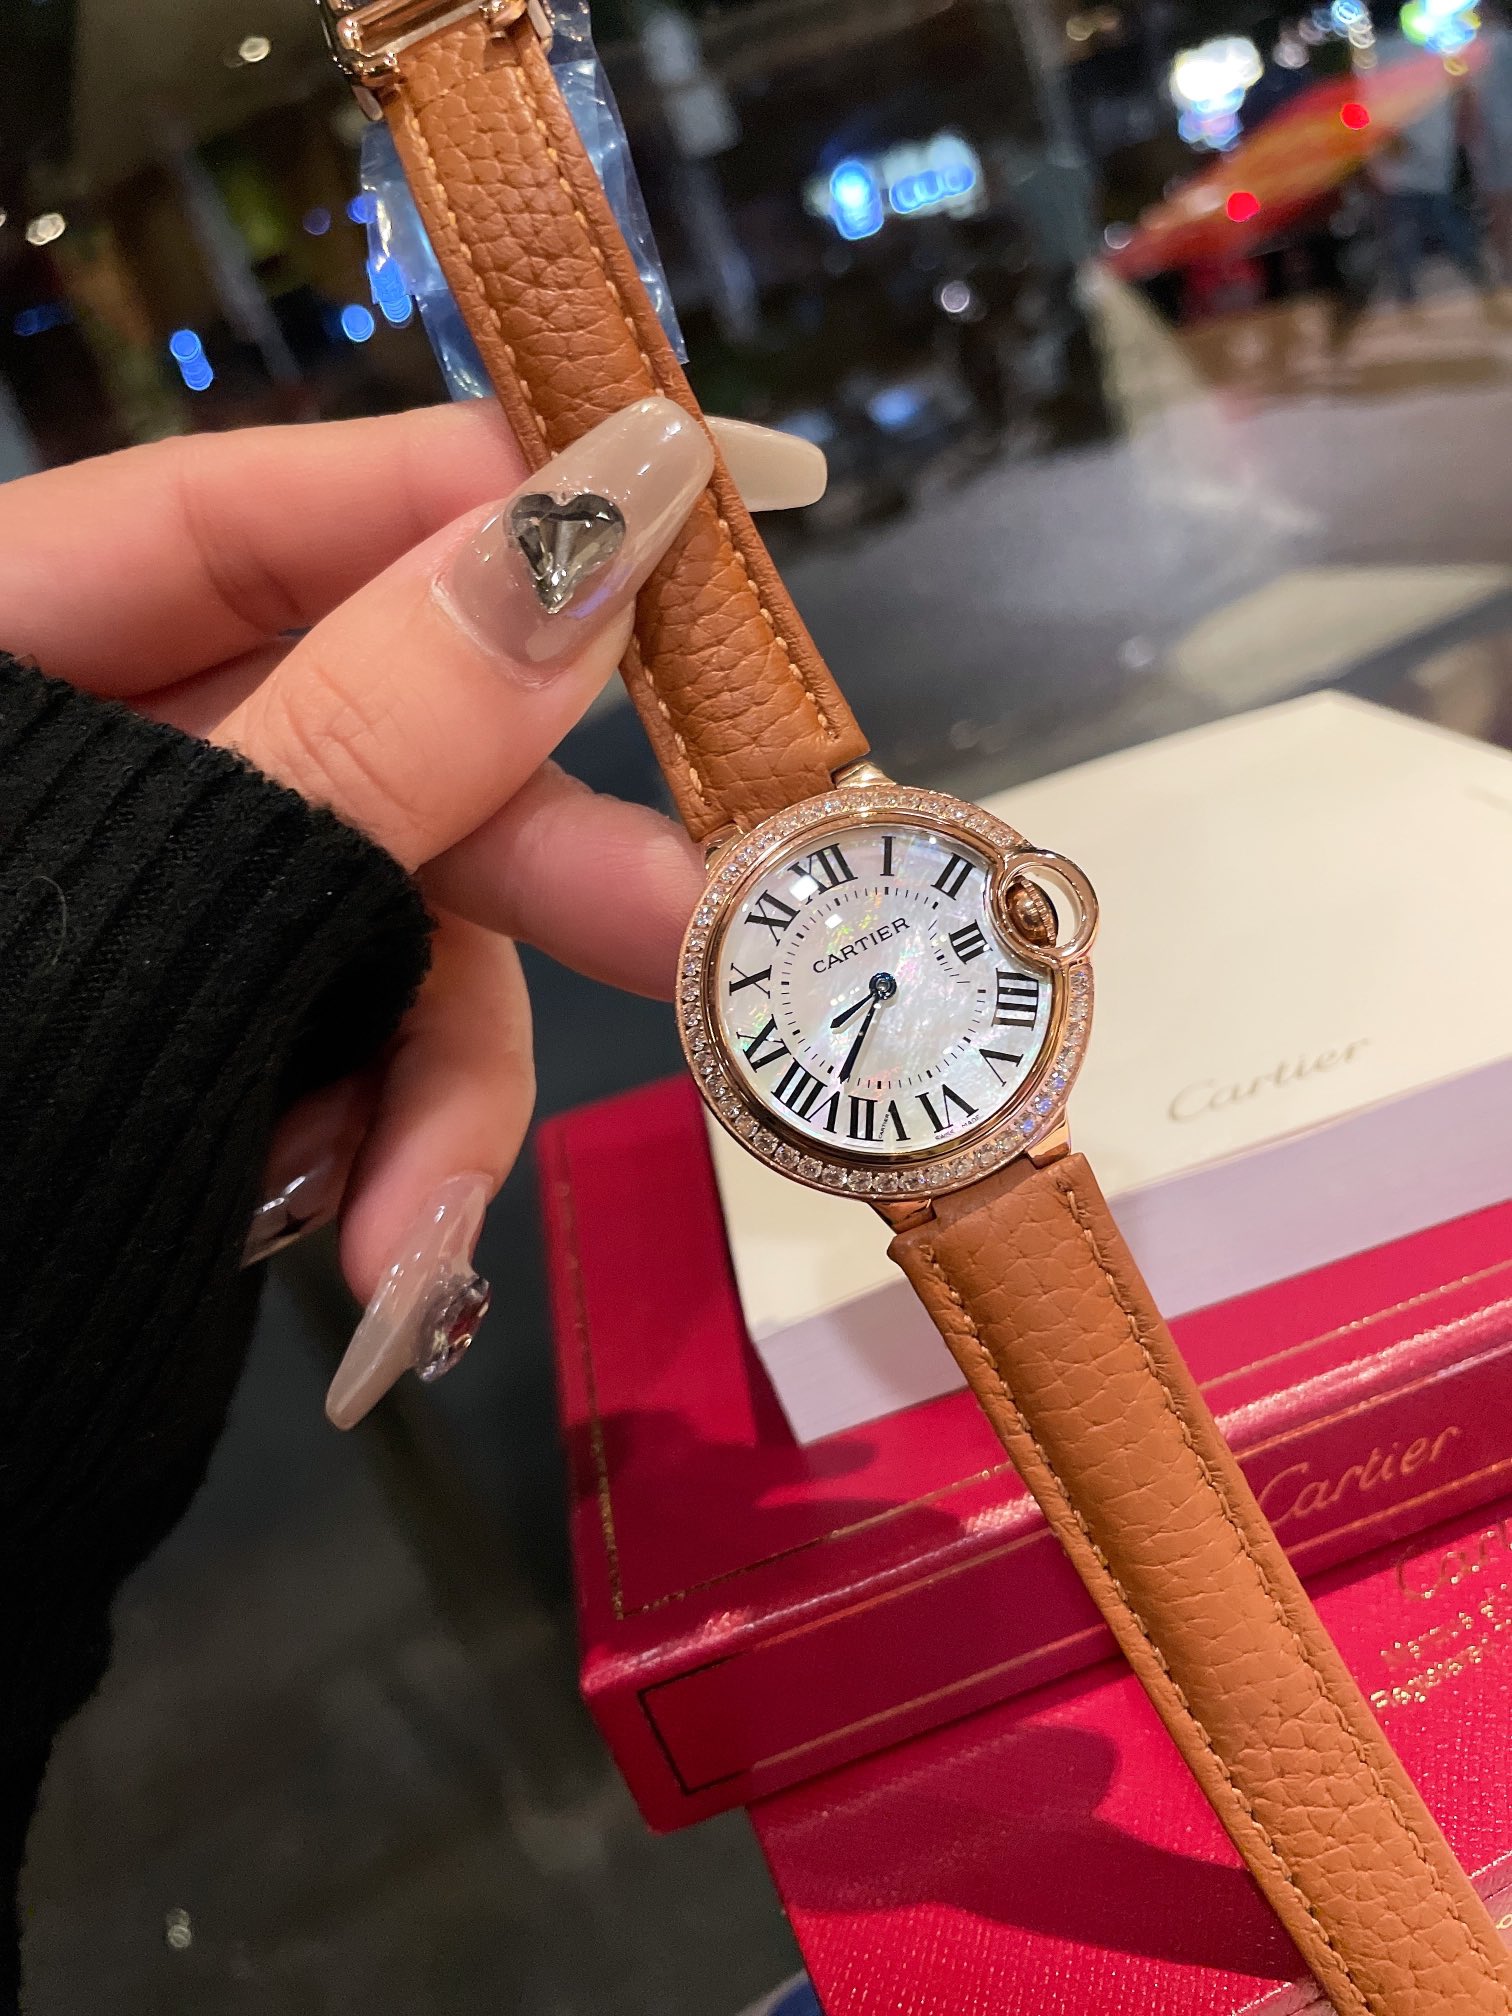 CARTIERカルティエ 腕時計 並行輸入コピー フランス 薄い腕時計 レザー 水晶ダイヤモンド 新商品 限定品 ブラウン_2